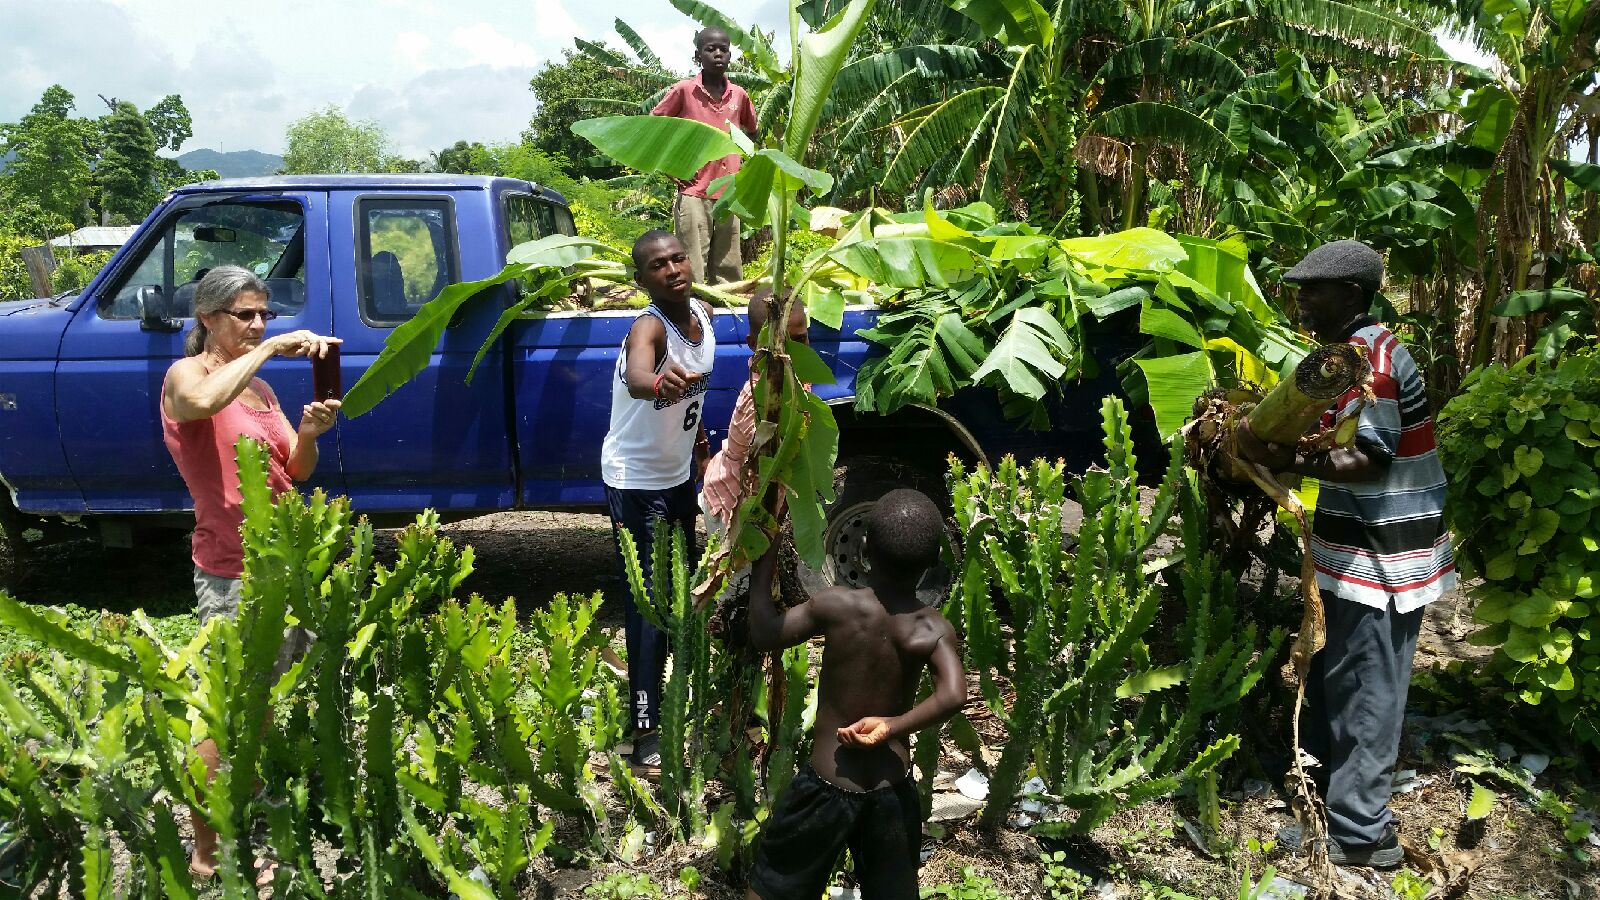 picking up banana trees to plant